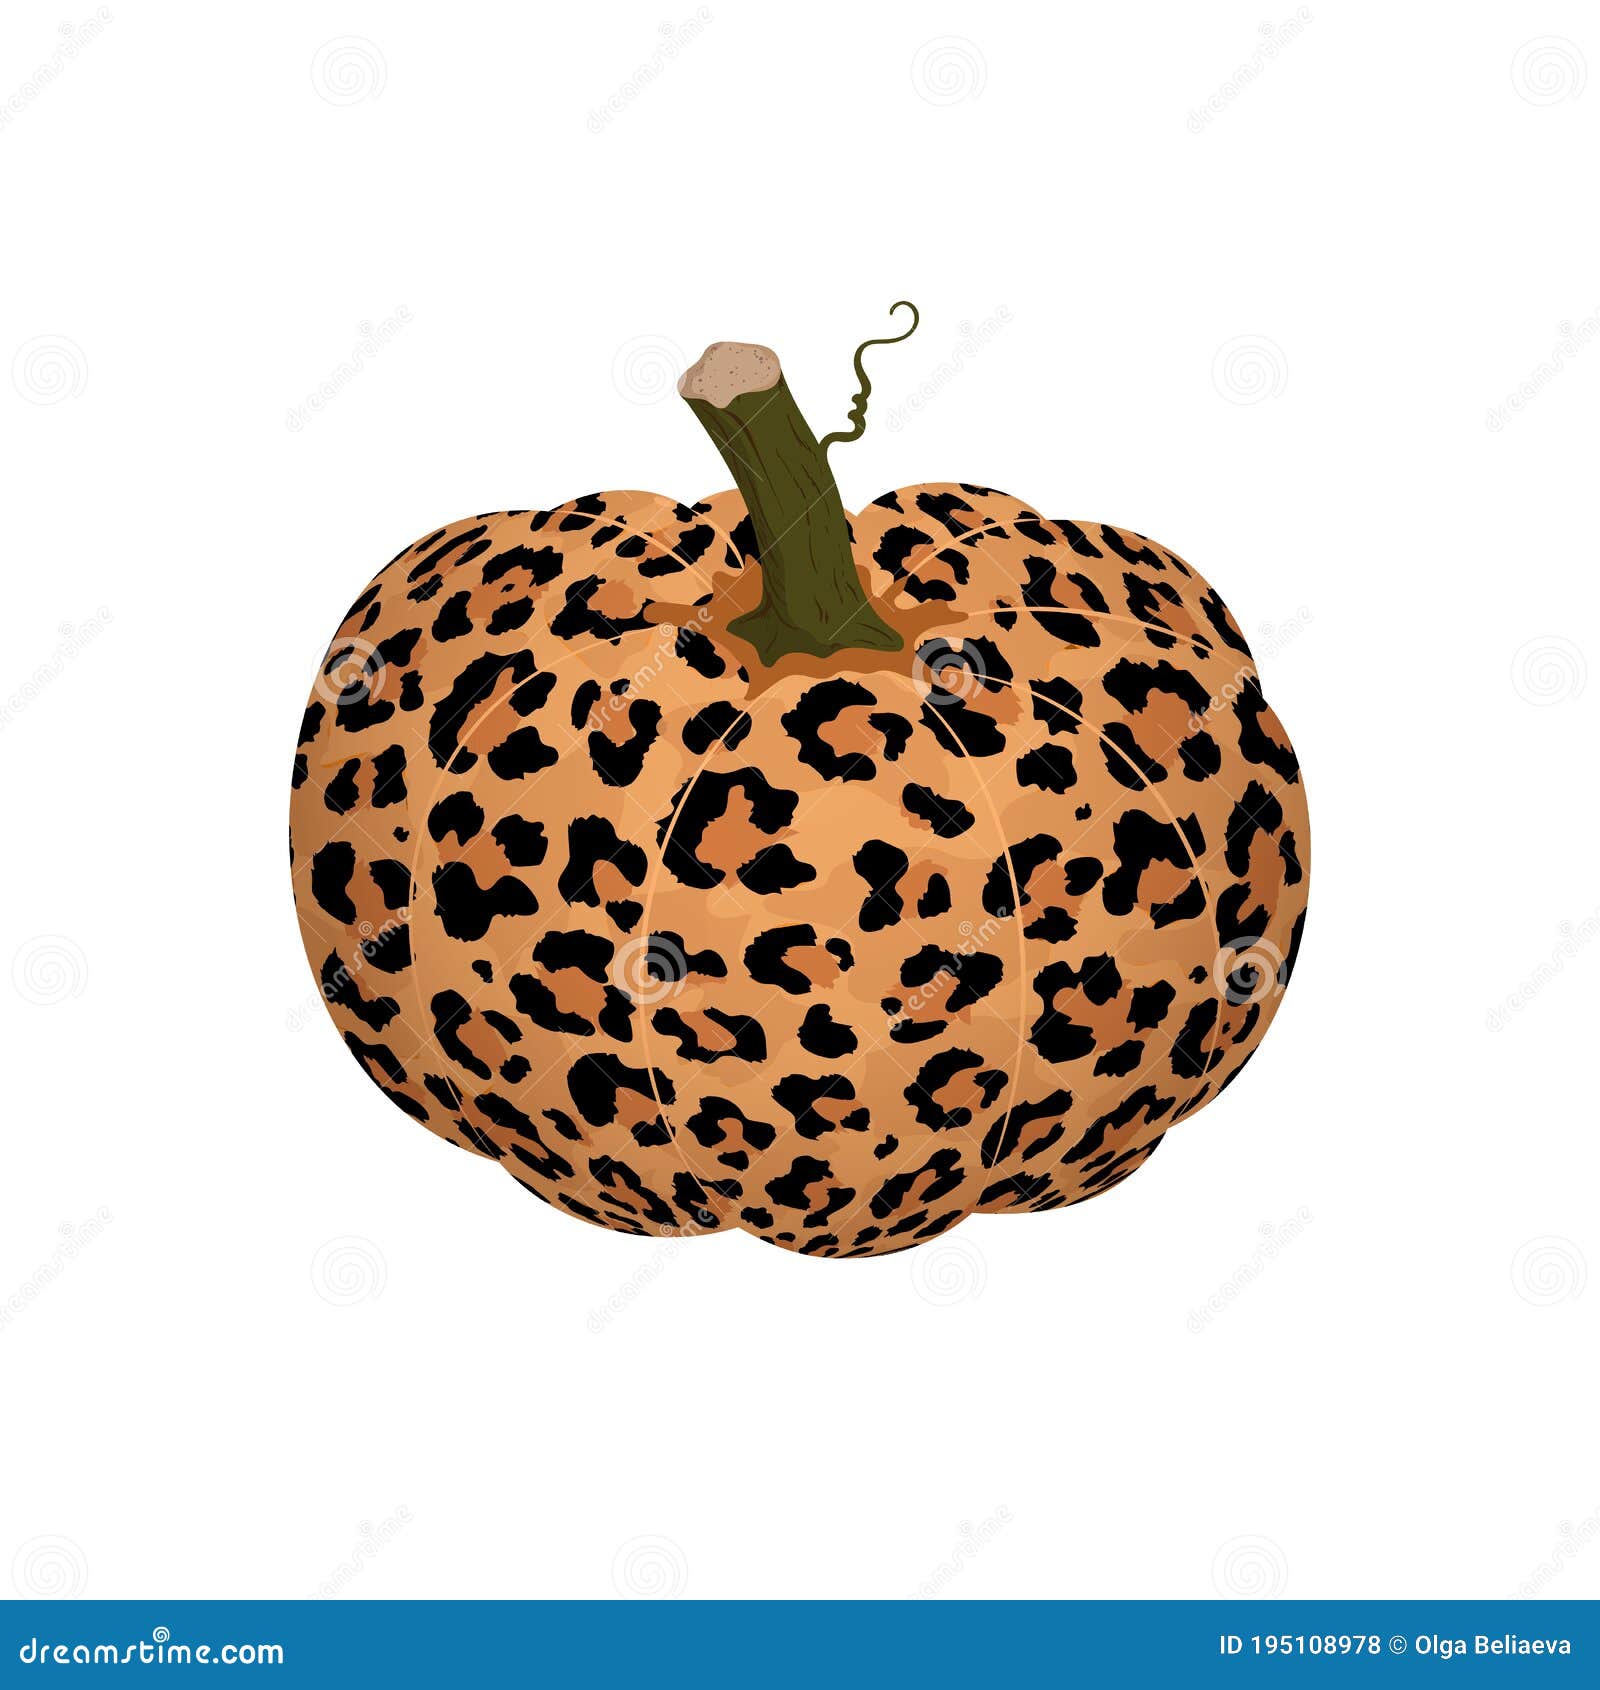 Pumpkin in Leopard Frame Handpainted Design PNG Artwork Digital File for printing and other crafts BCEH